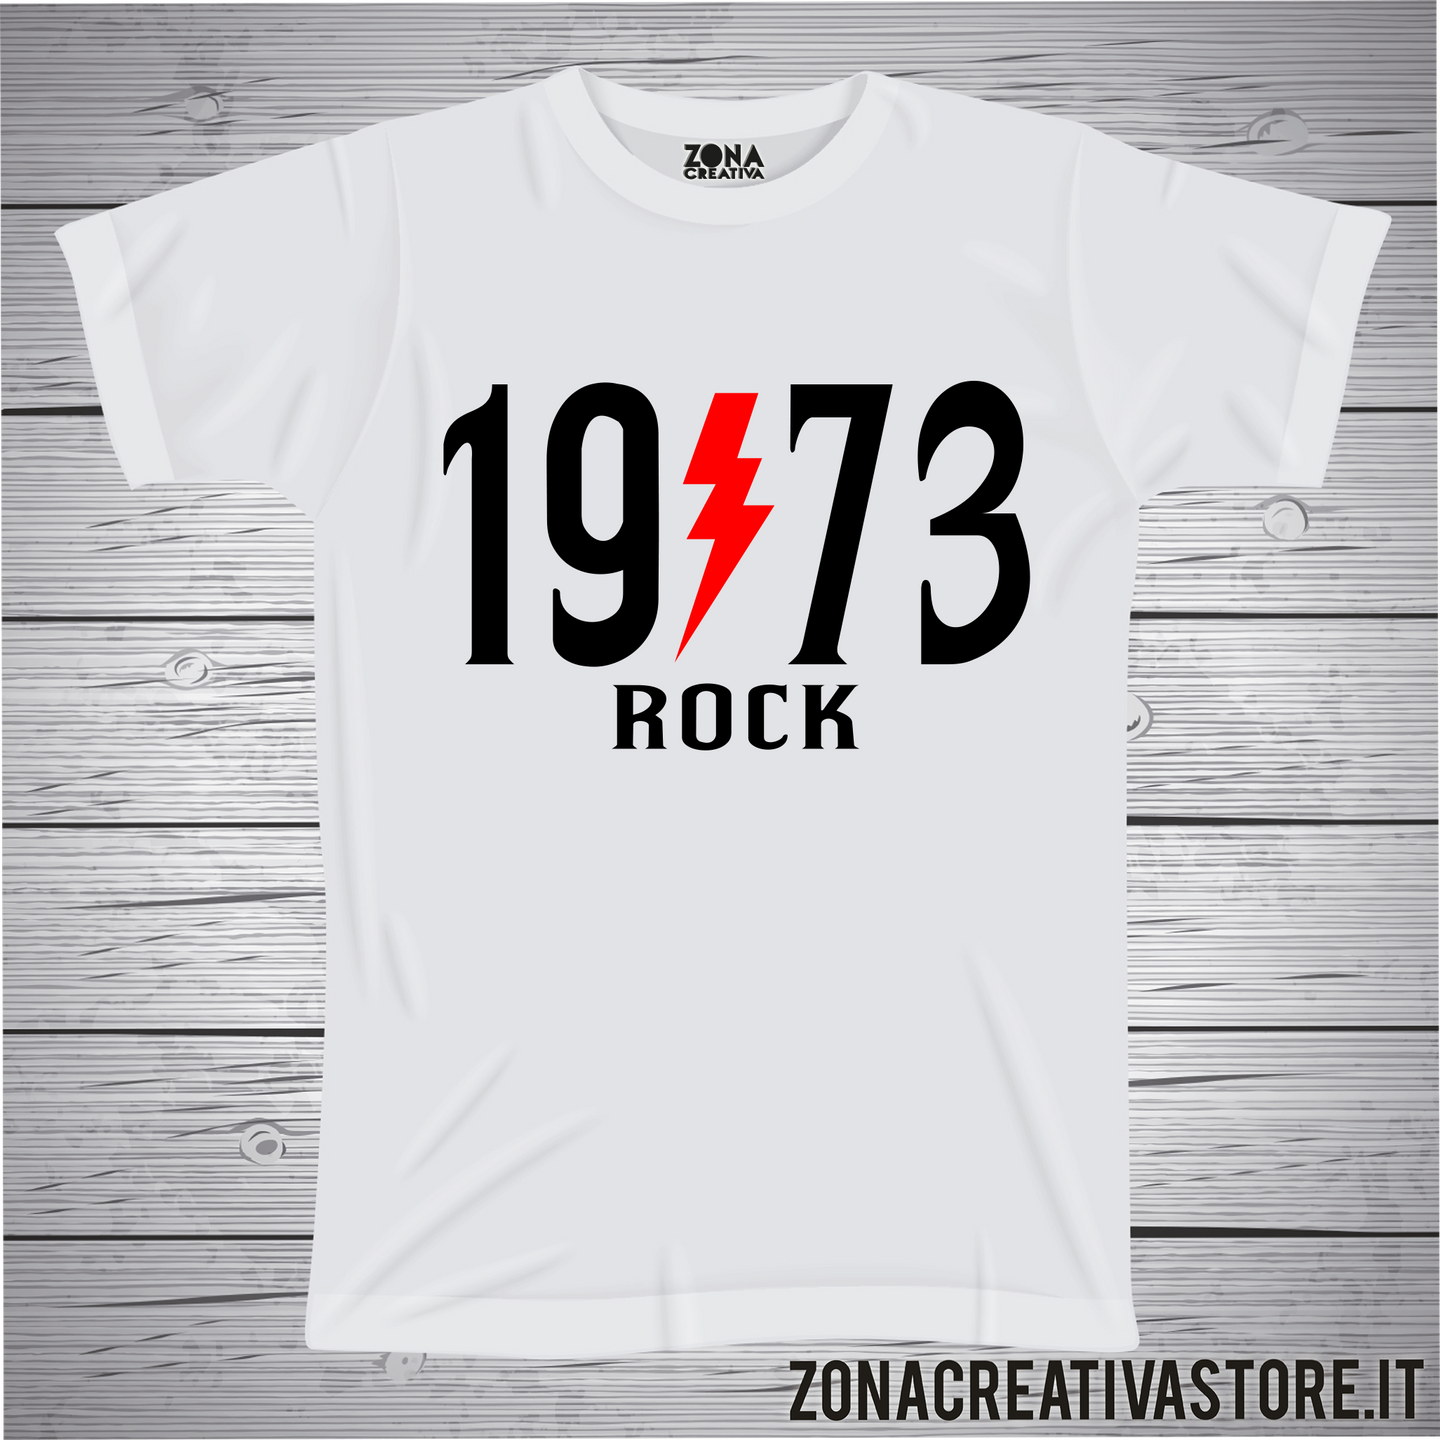 T-shirt per festa di compleanno 1973 ROCK